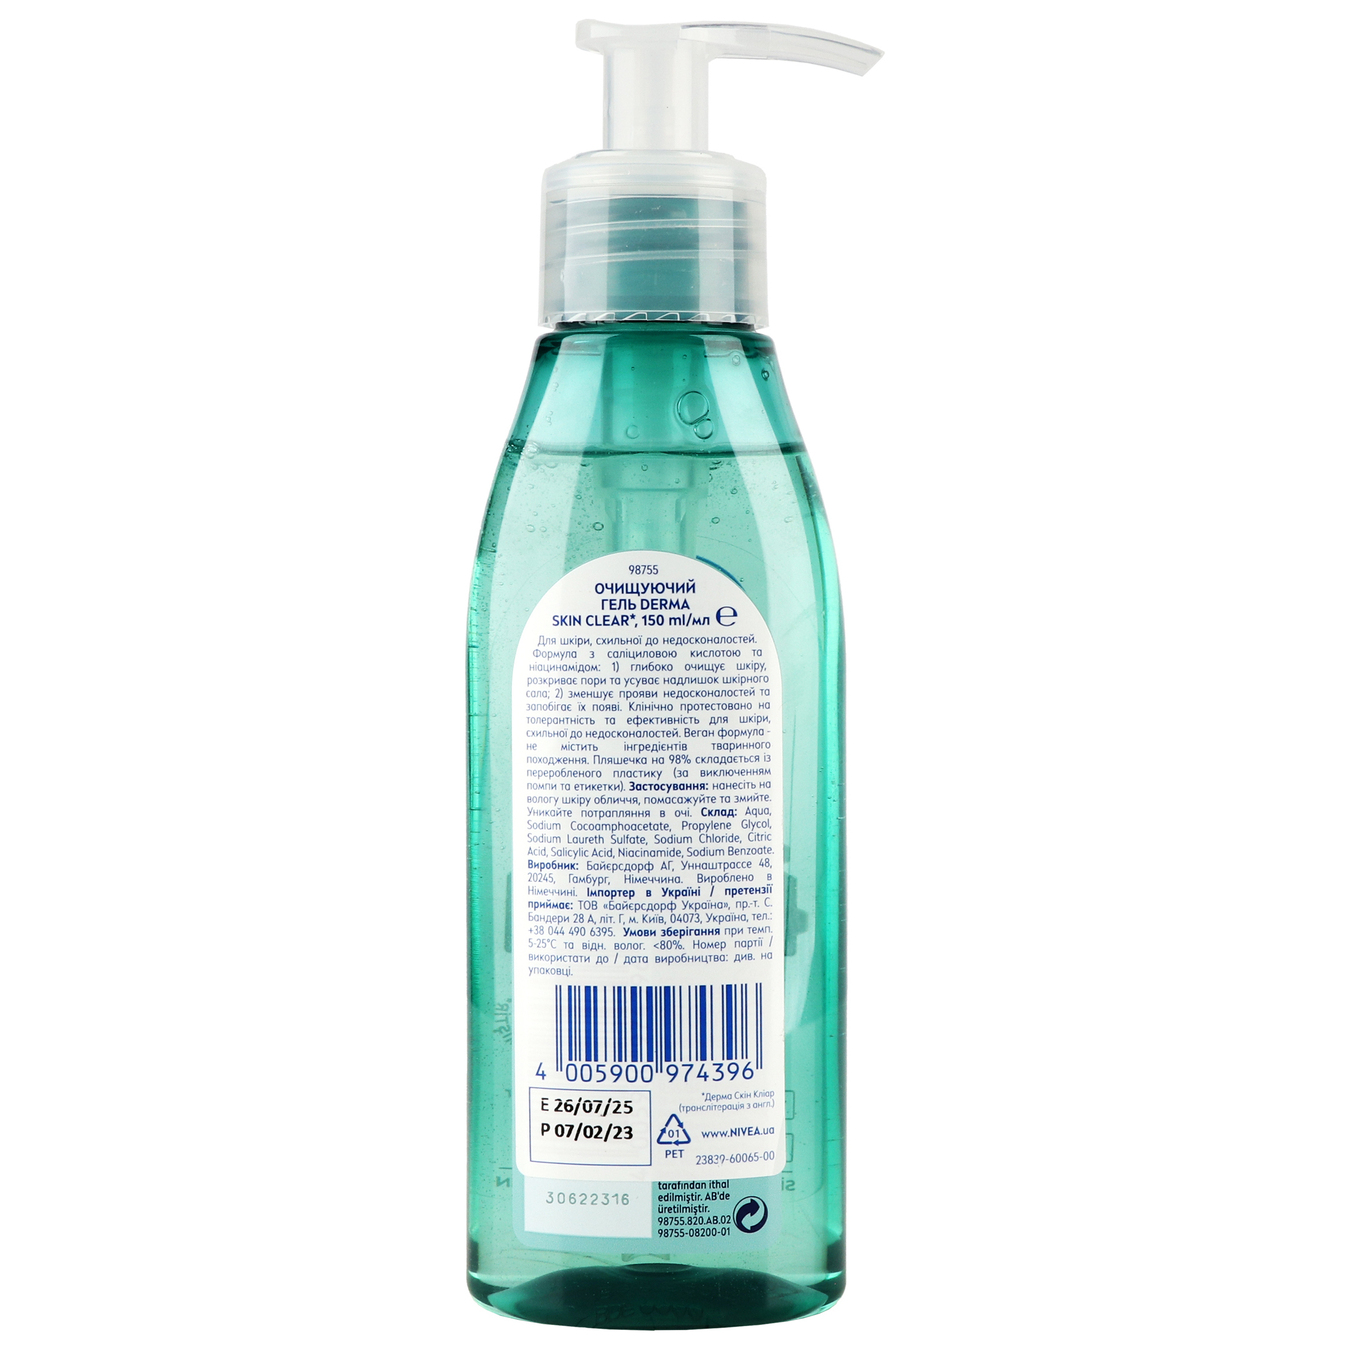 Nivea derma skin clear cleansing face gel 150 ml 3